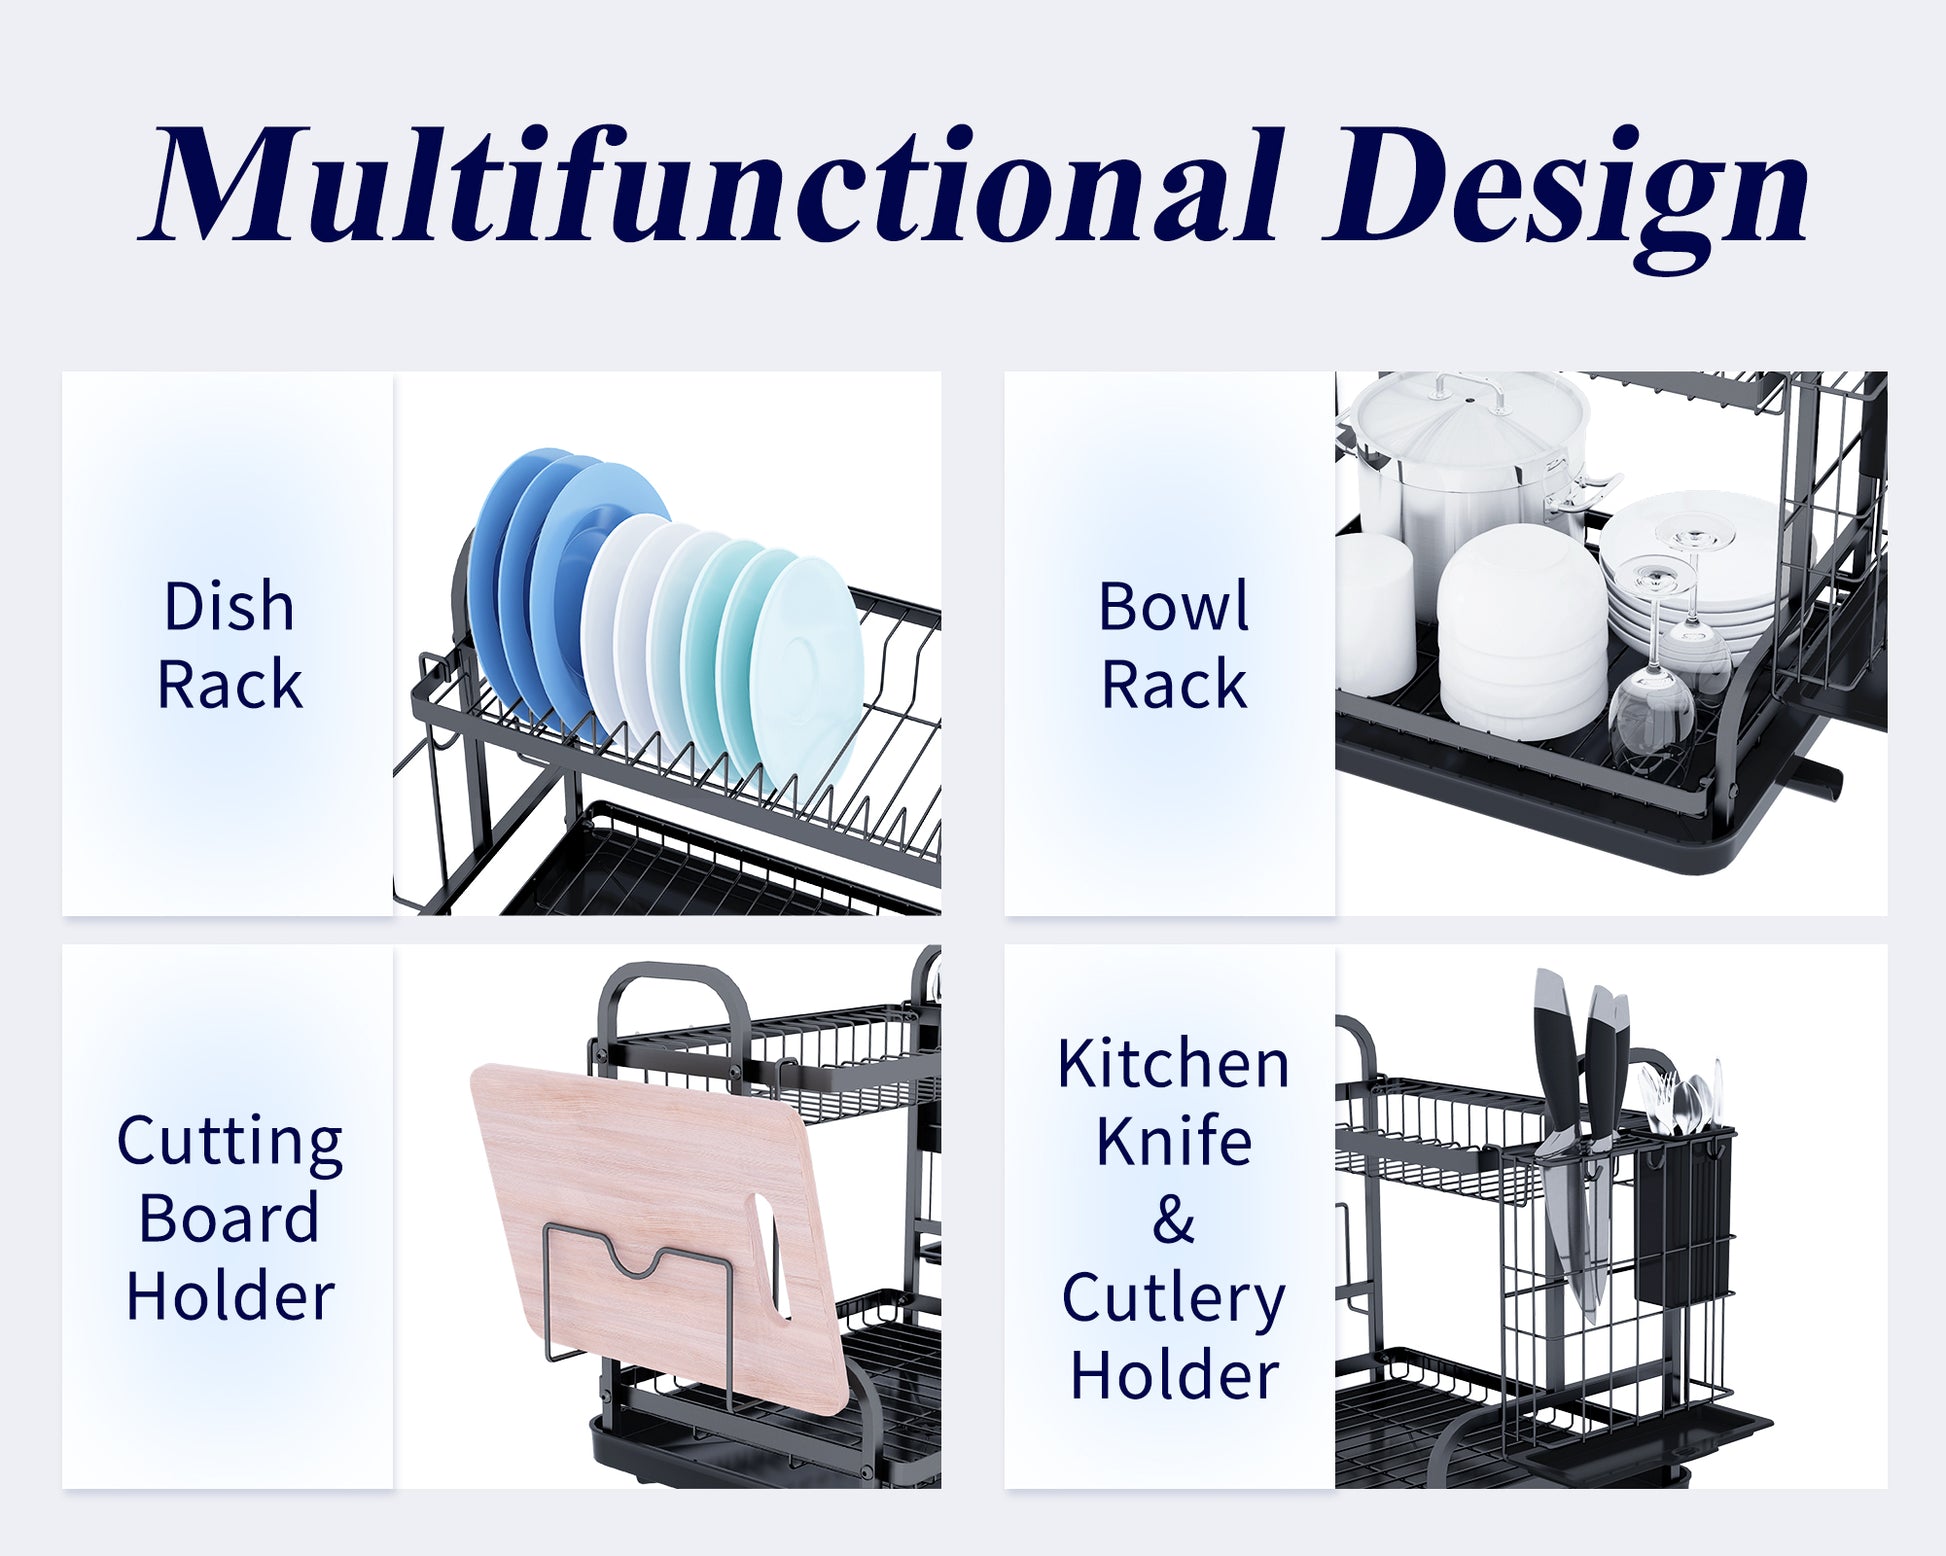  Kitsure Kitchen Dish Drying Rack - Extendable Dish Rack  w/Large Capacity, Dish Rack for Kitchen Counter, Multipurpose Dish Drainer  w/Detachable Brackets for Pot Lids, Dishes, Pans, White1